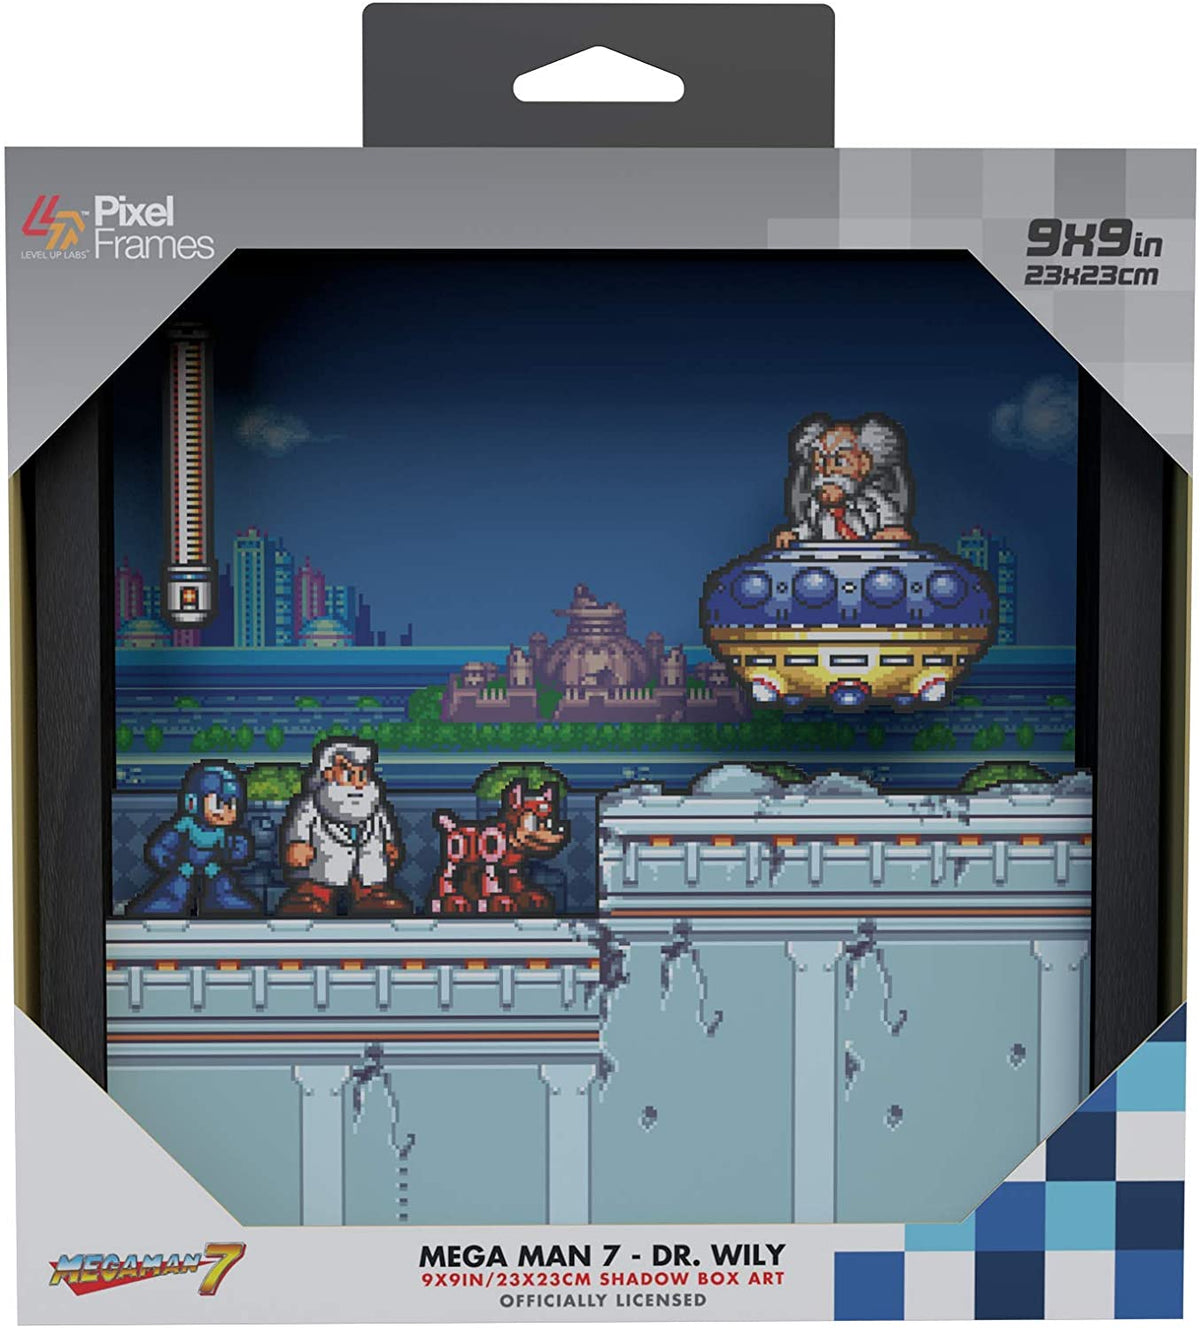 Pixel Frames - Megaman 7 Dr. Wily Gamesellers.nl